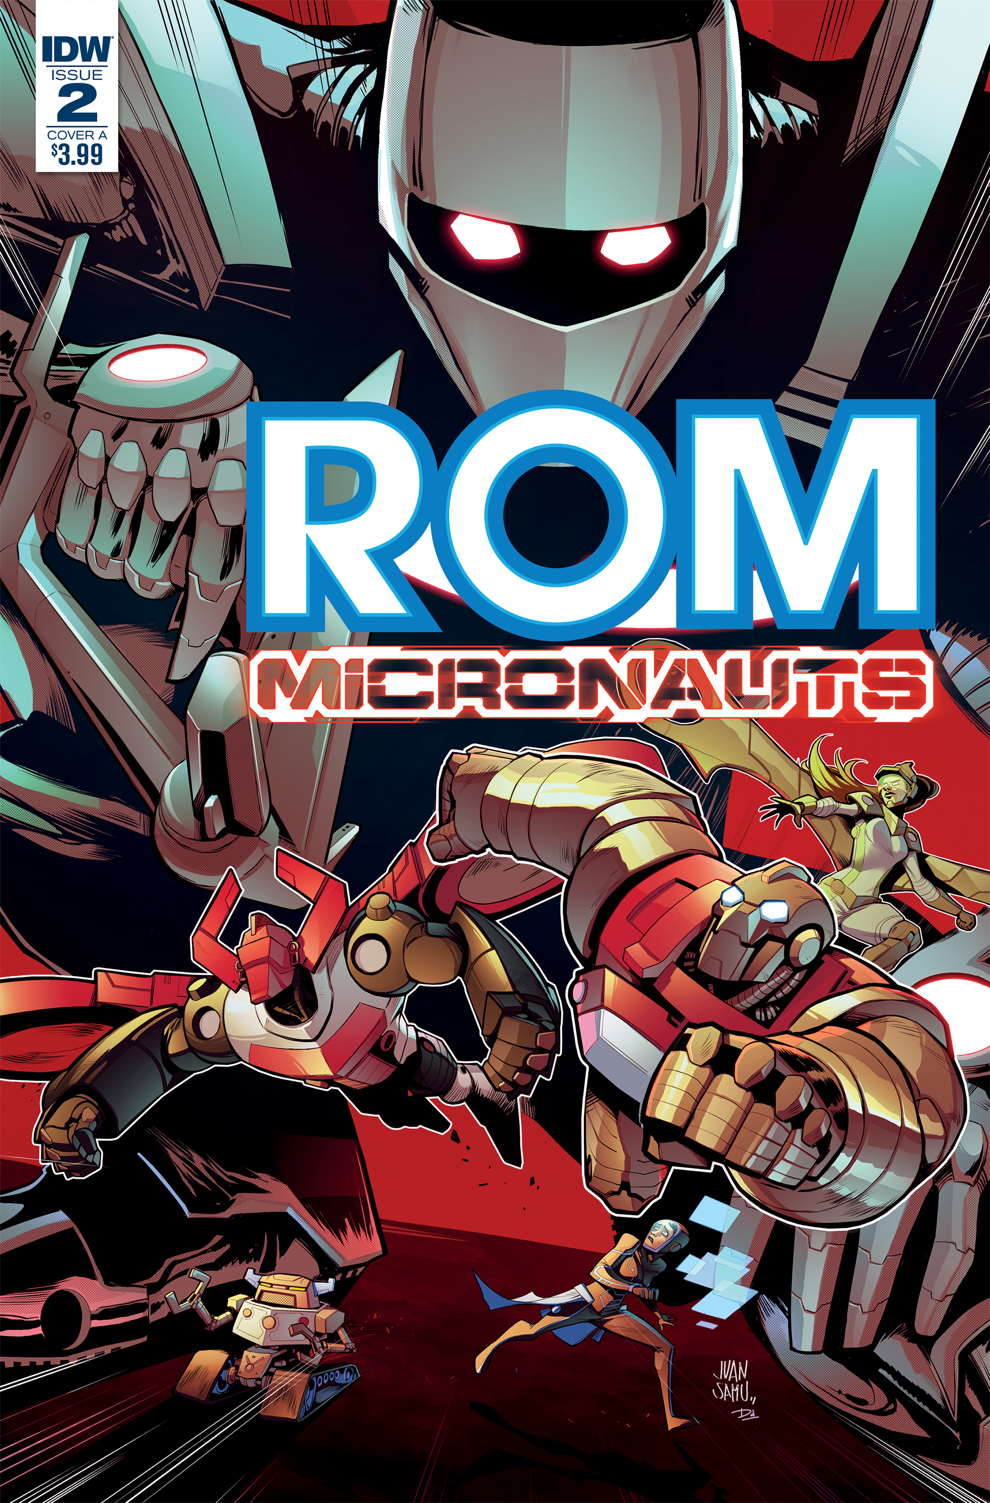 Rom-Micronauts juansamu